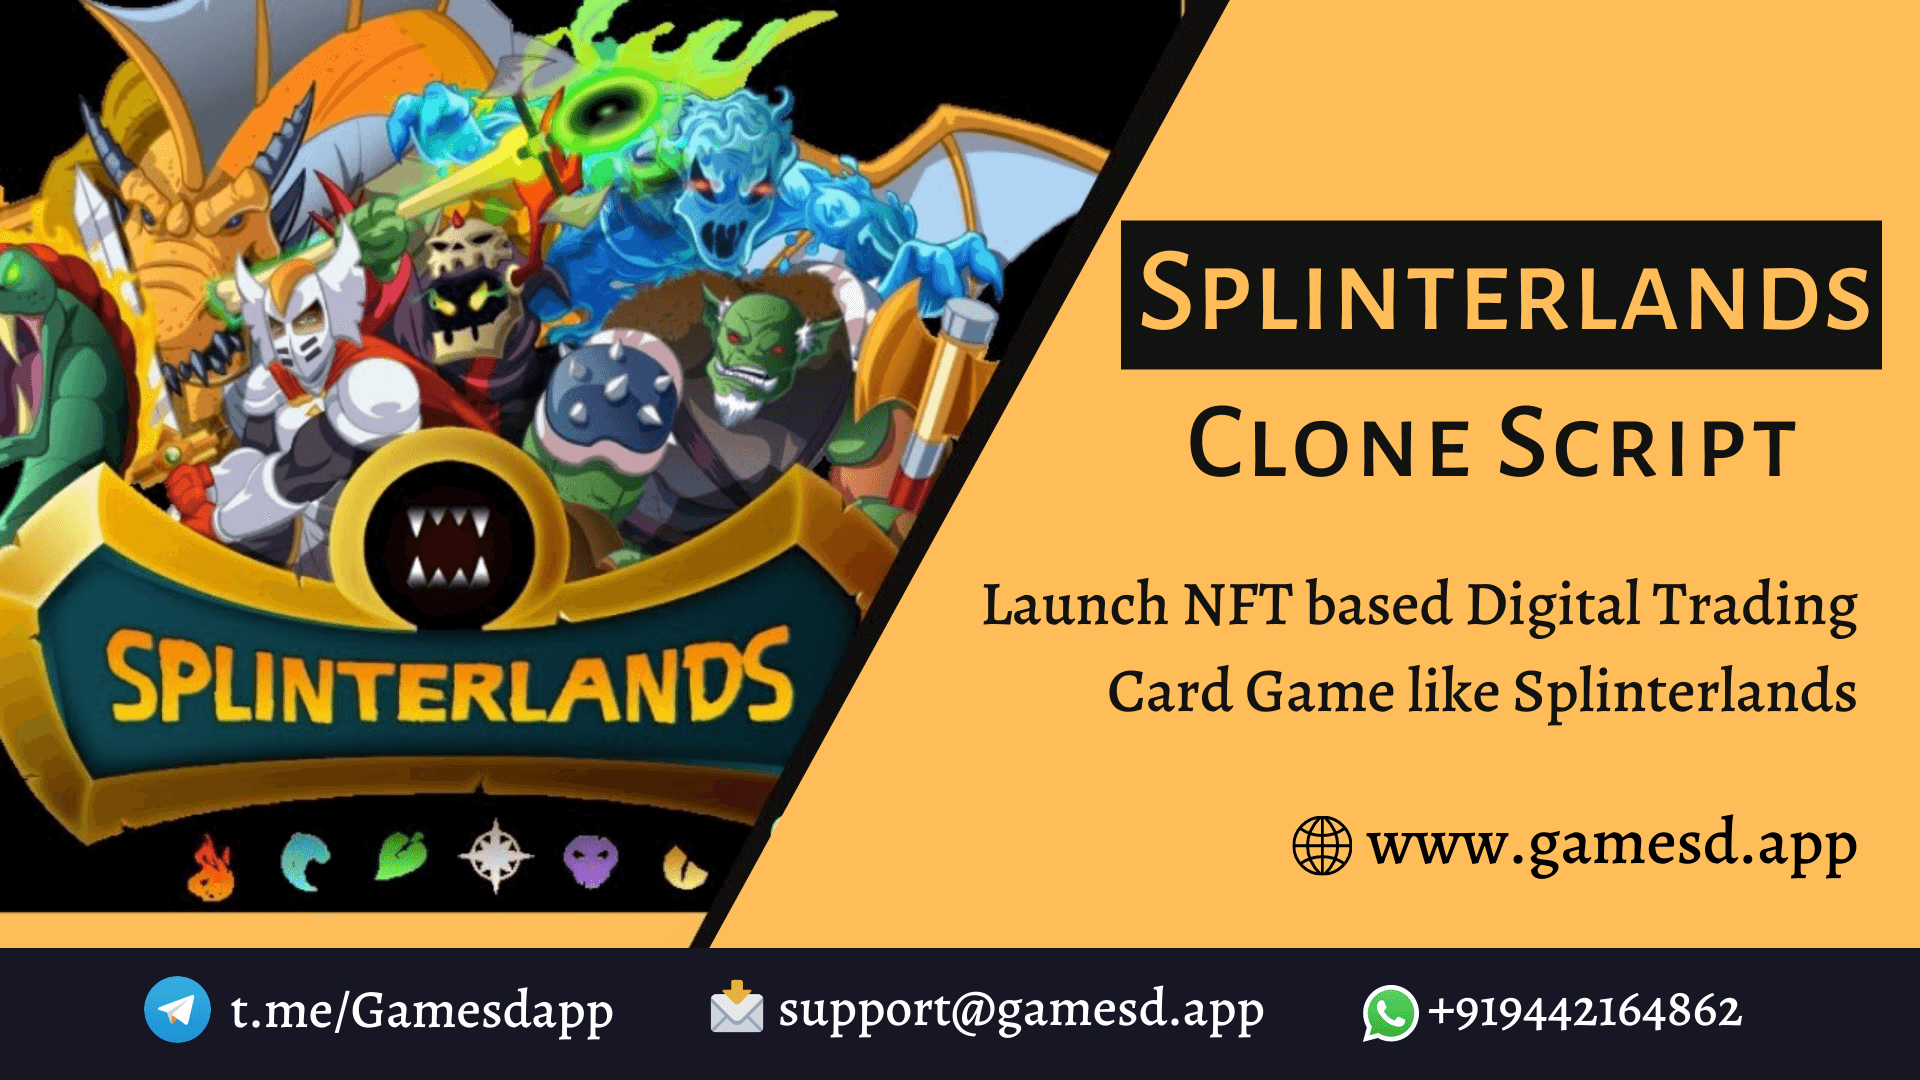 Splinterlands Clone Script - To Launch NFT based Digital Trading Card Game like Splinterlands